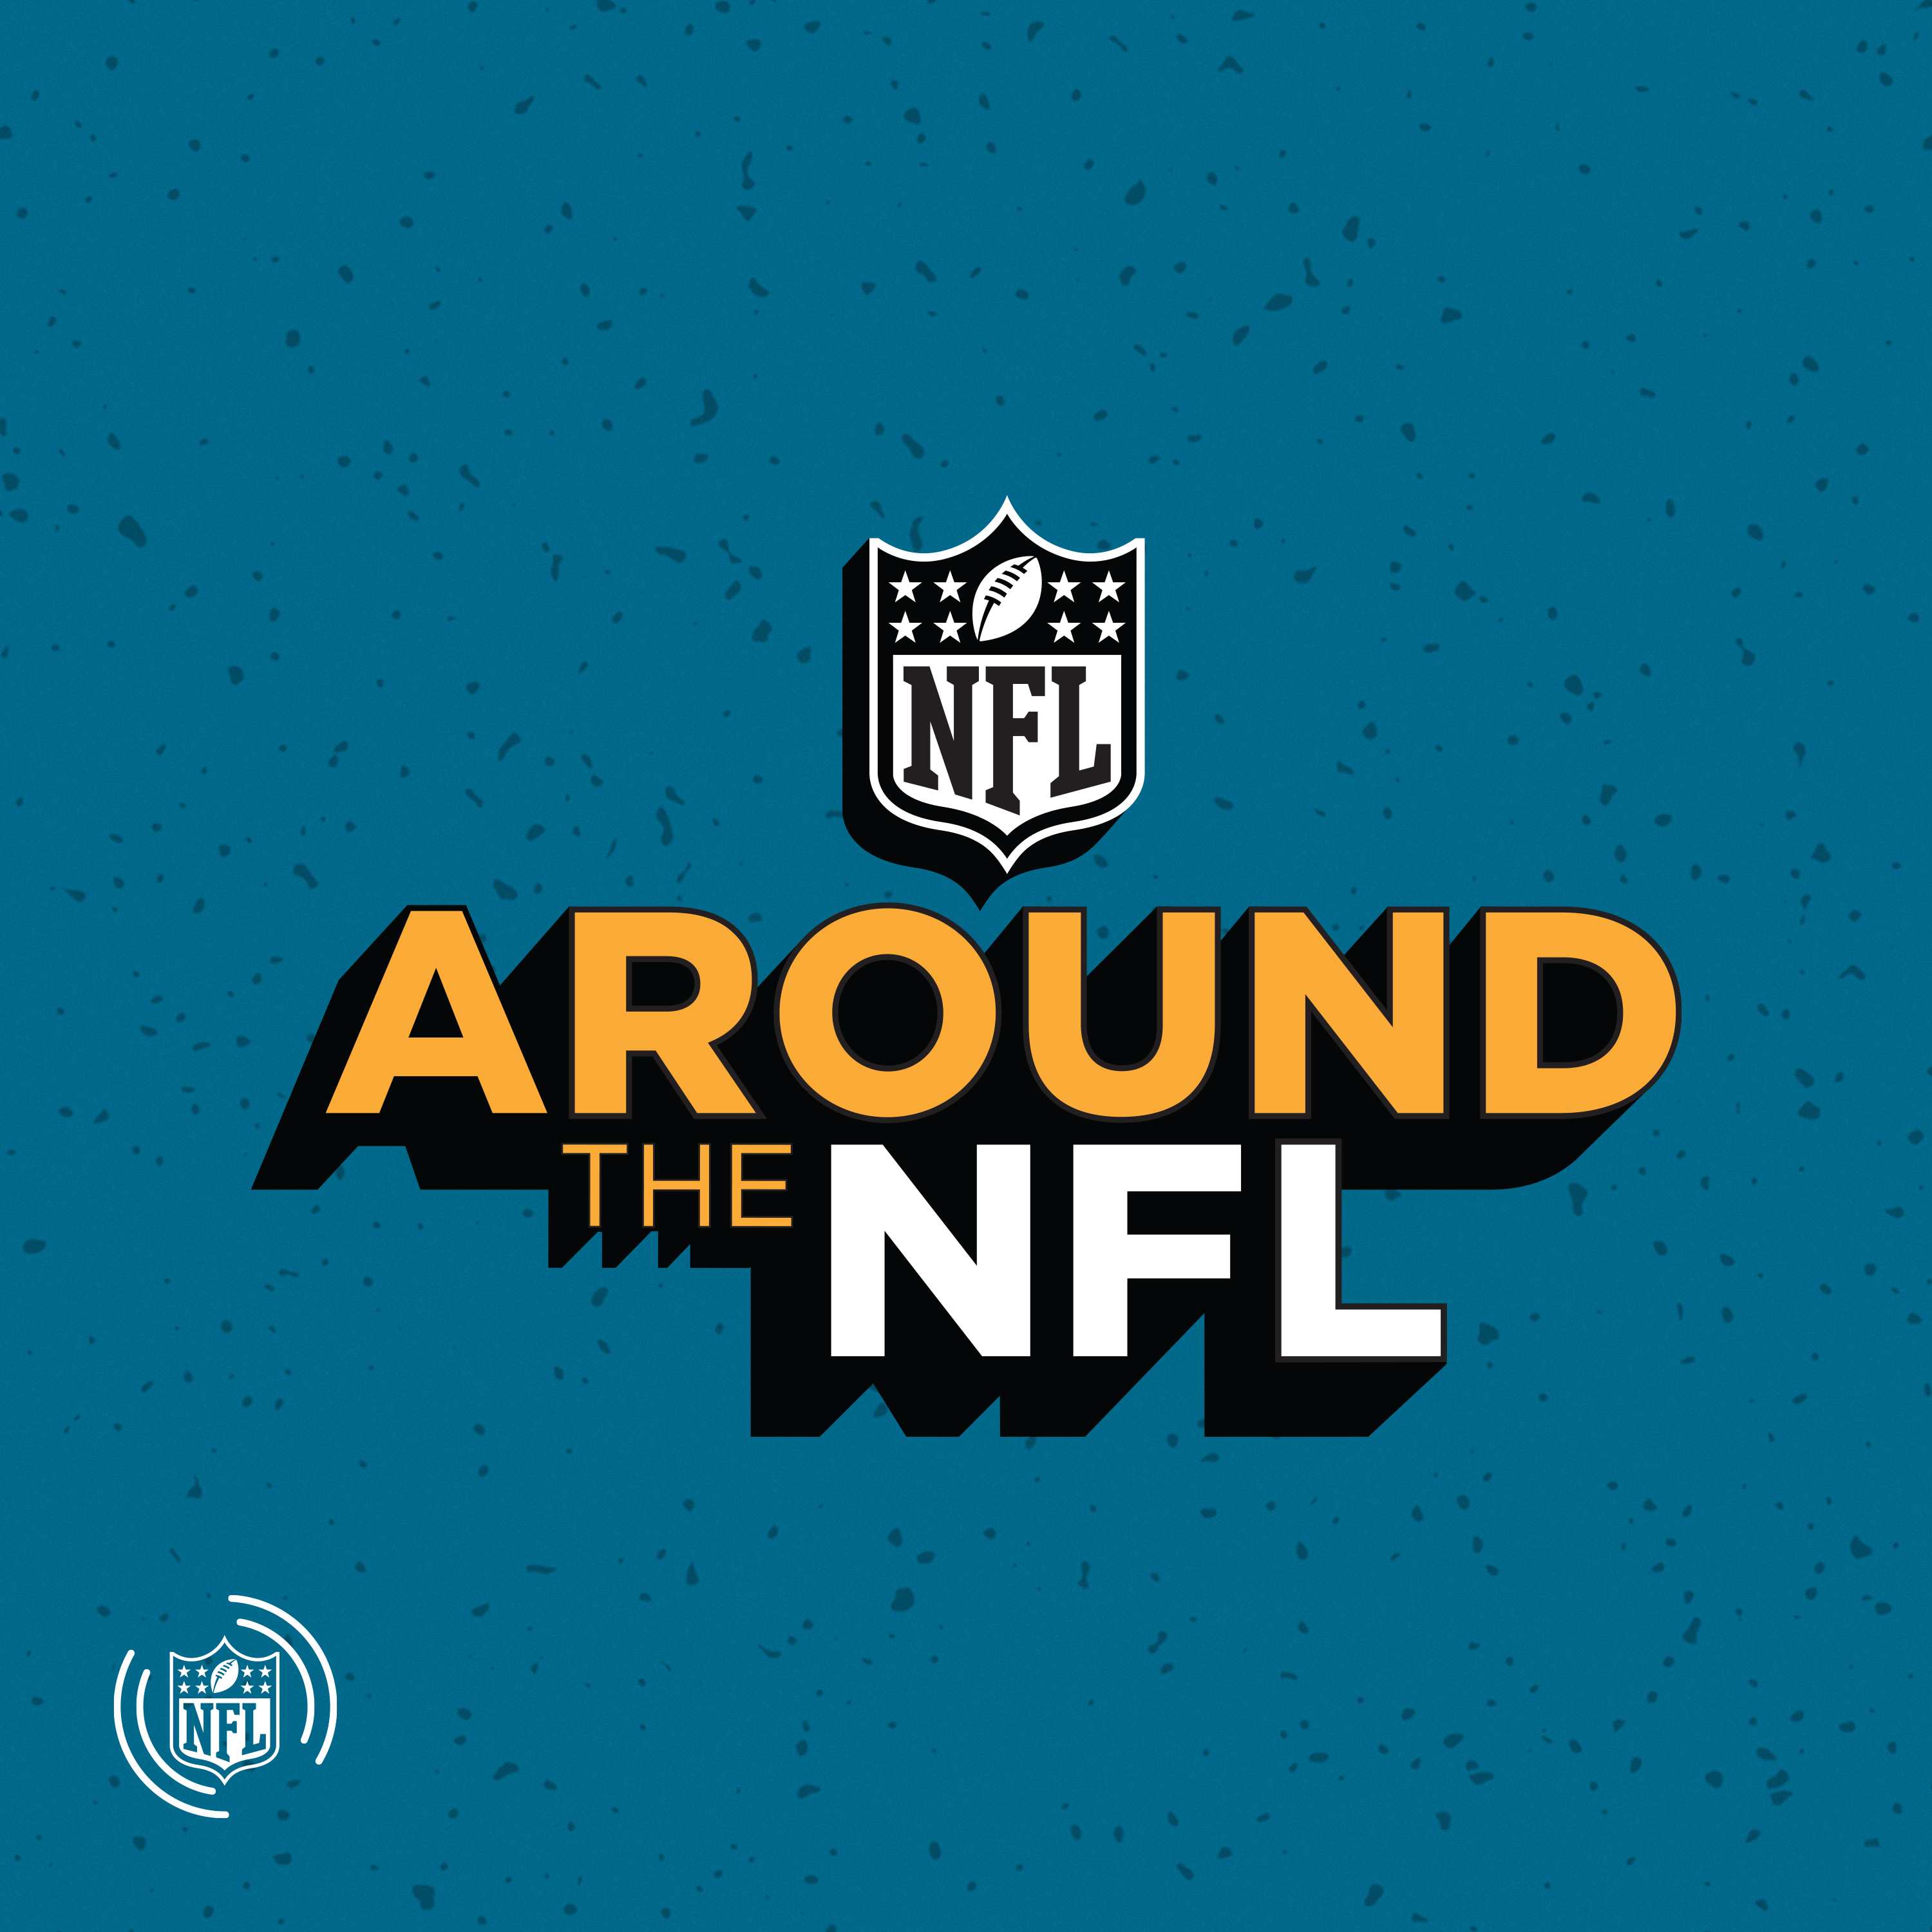 NFL ATL: Week 14 recap